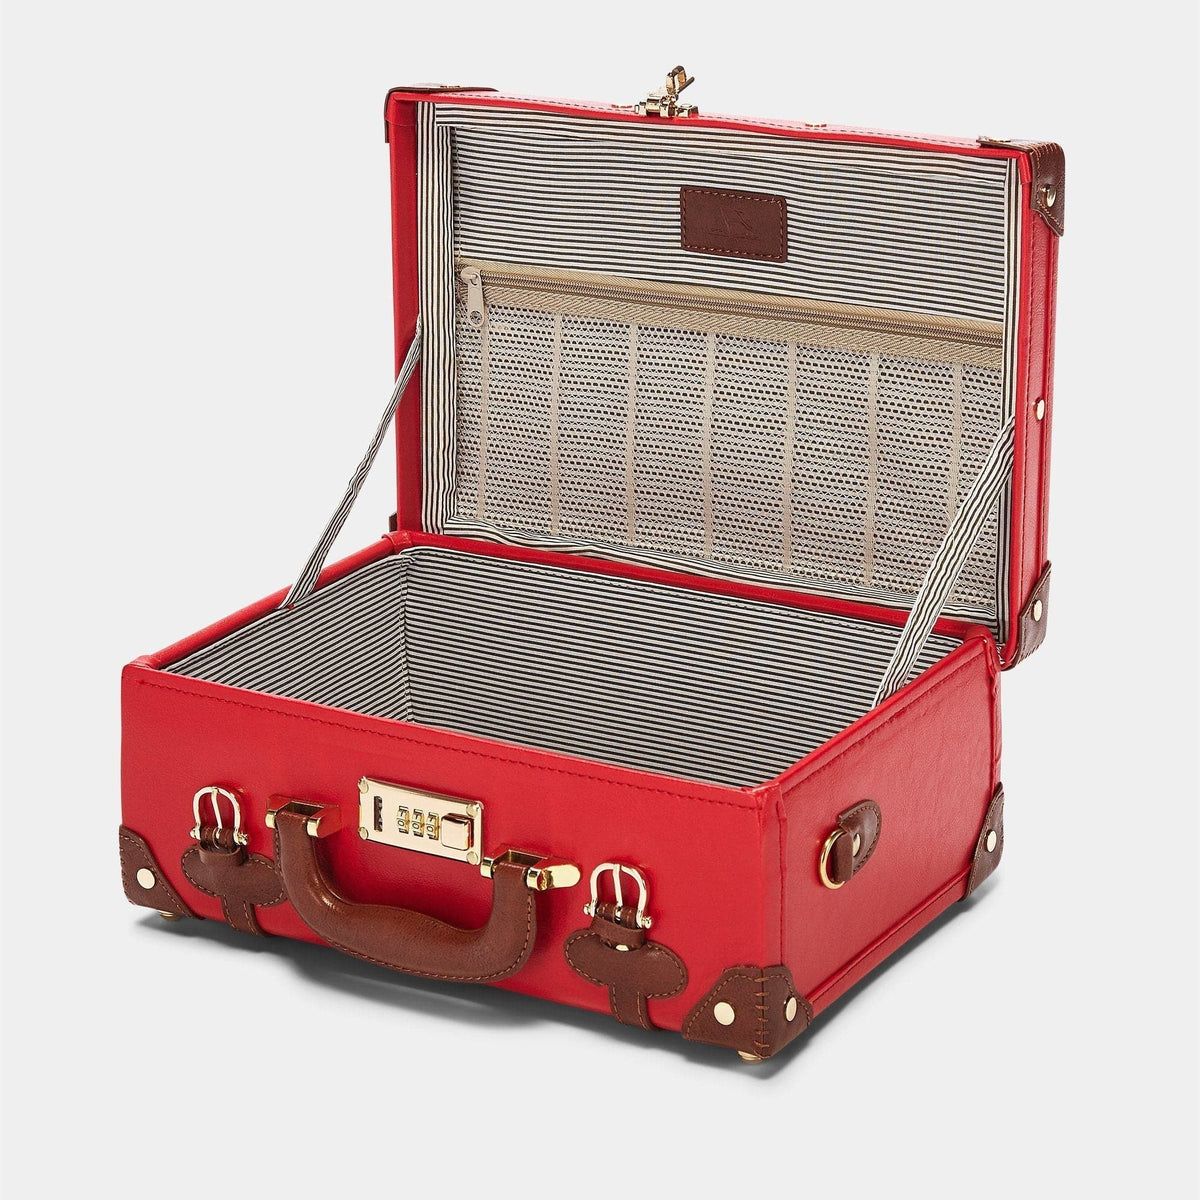 trunk briefcase bag